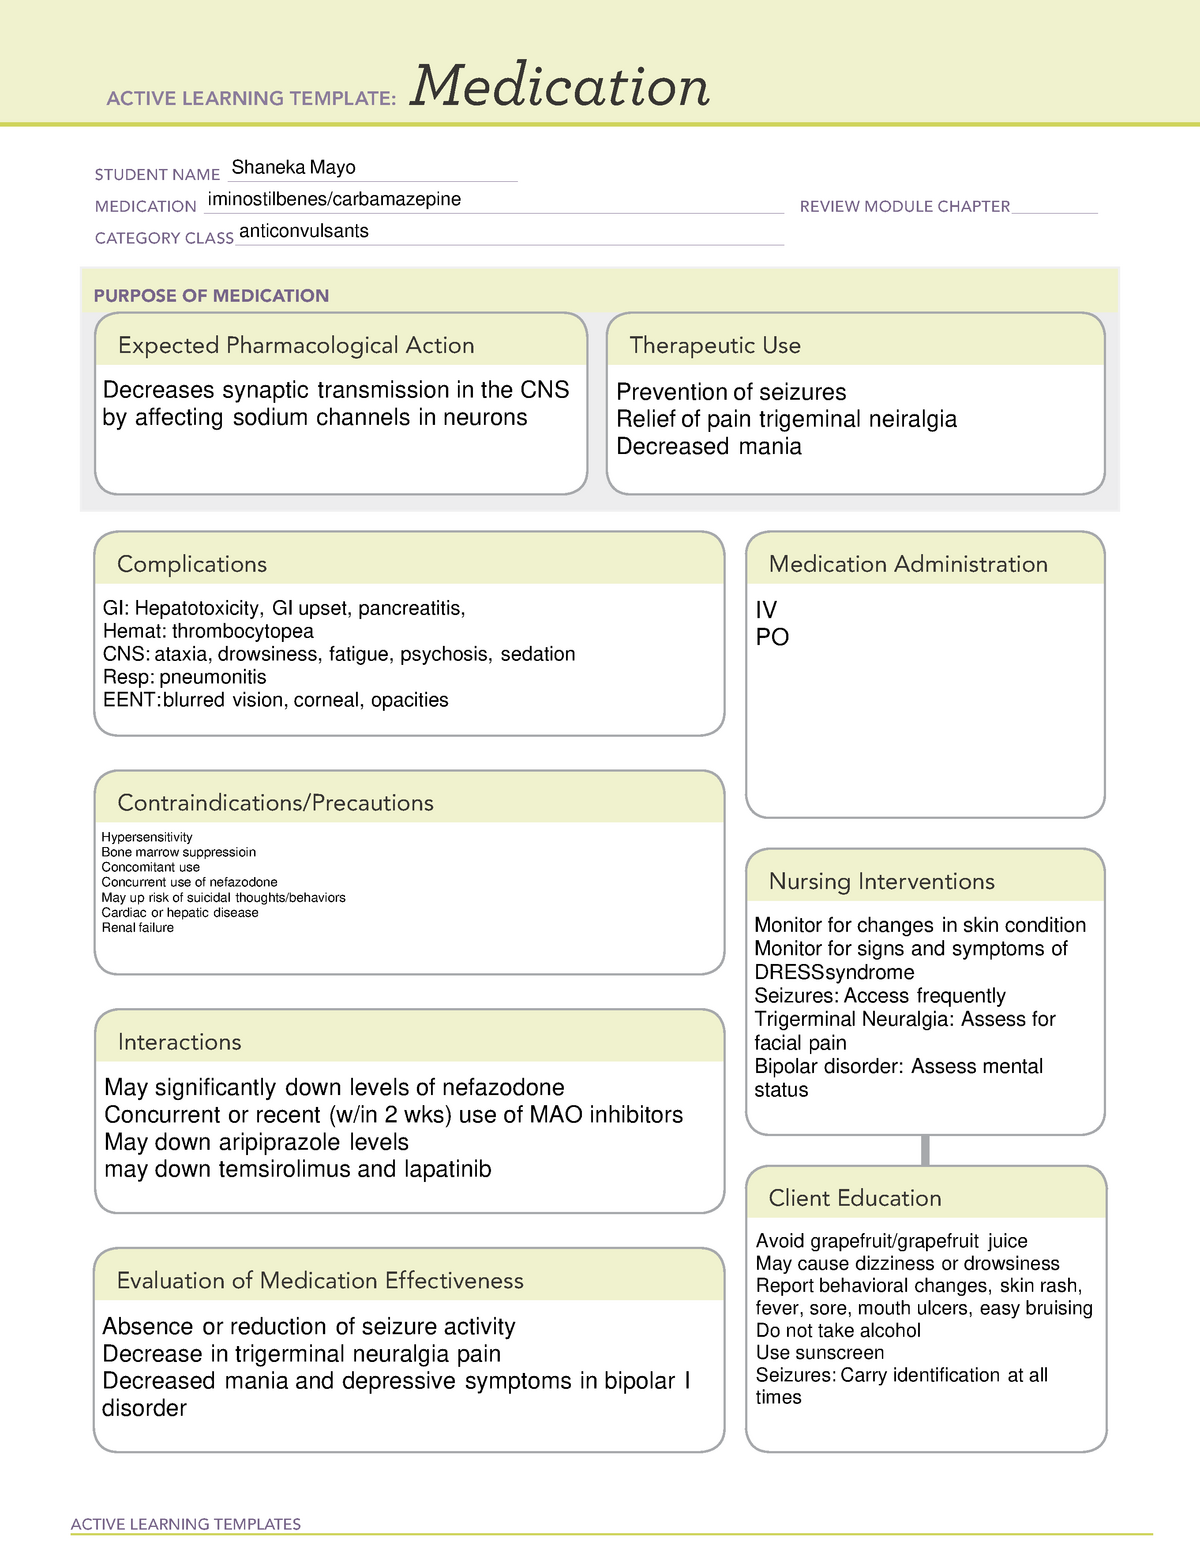 iminostilbenes-carbamazepine-active-learning-templates-medication